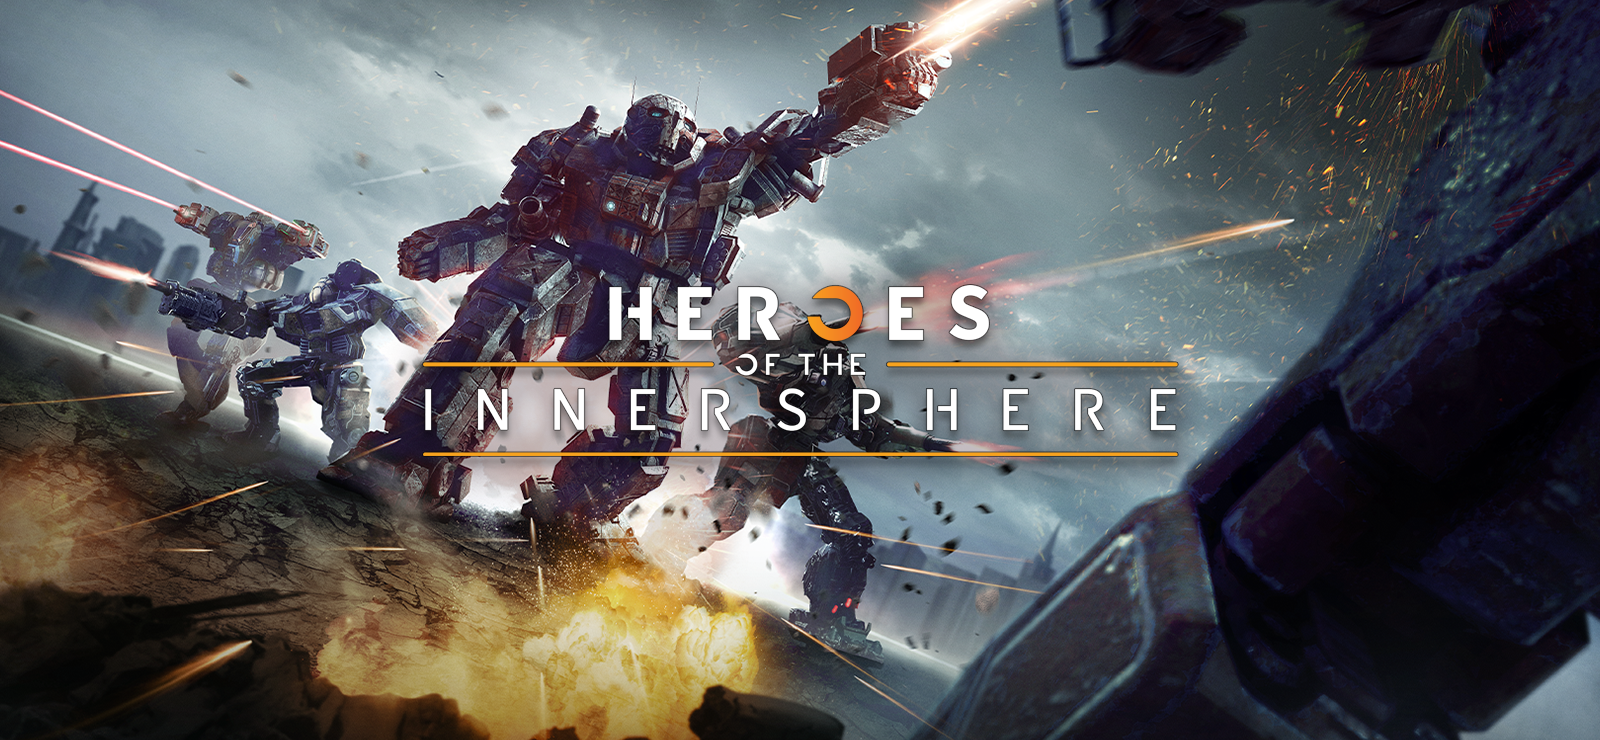 MechWarrior 5: Heroes Of The Inner Sphere